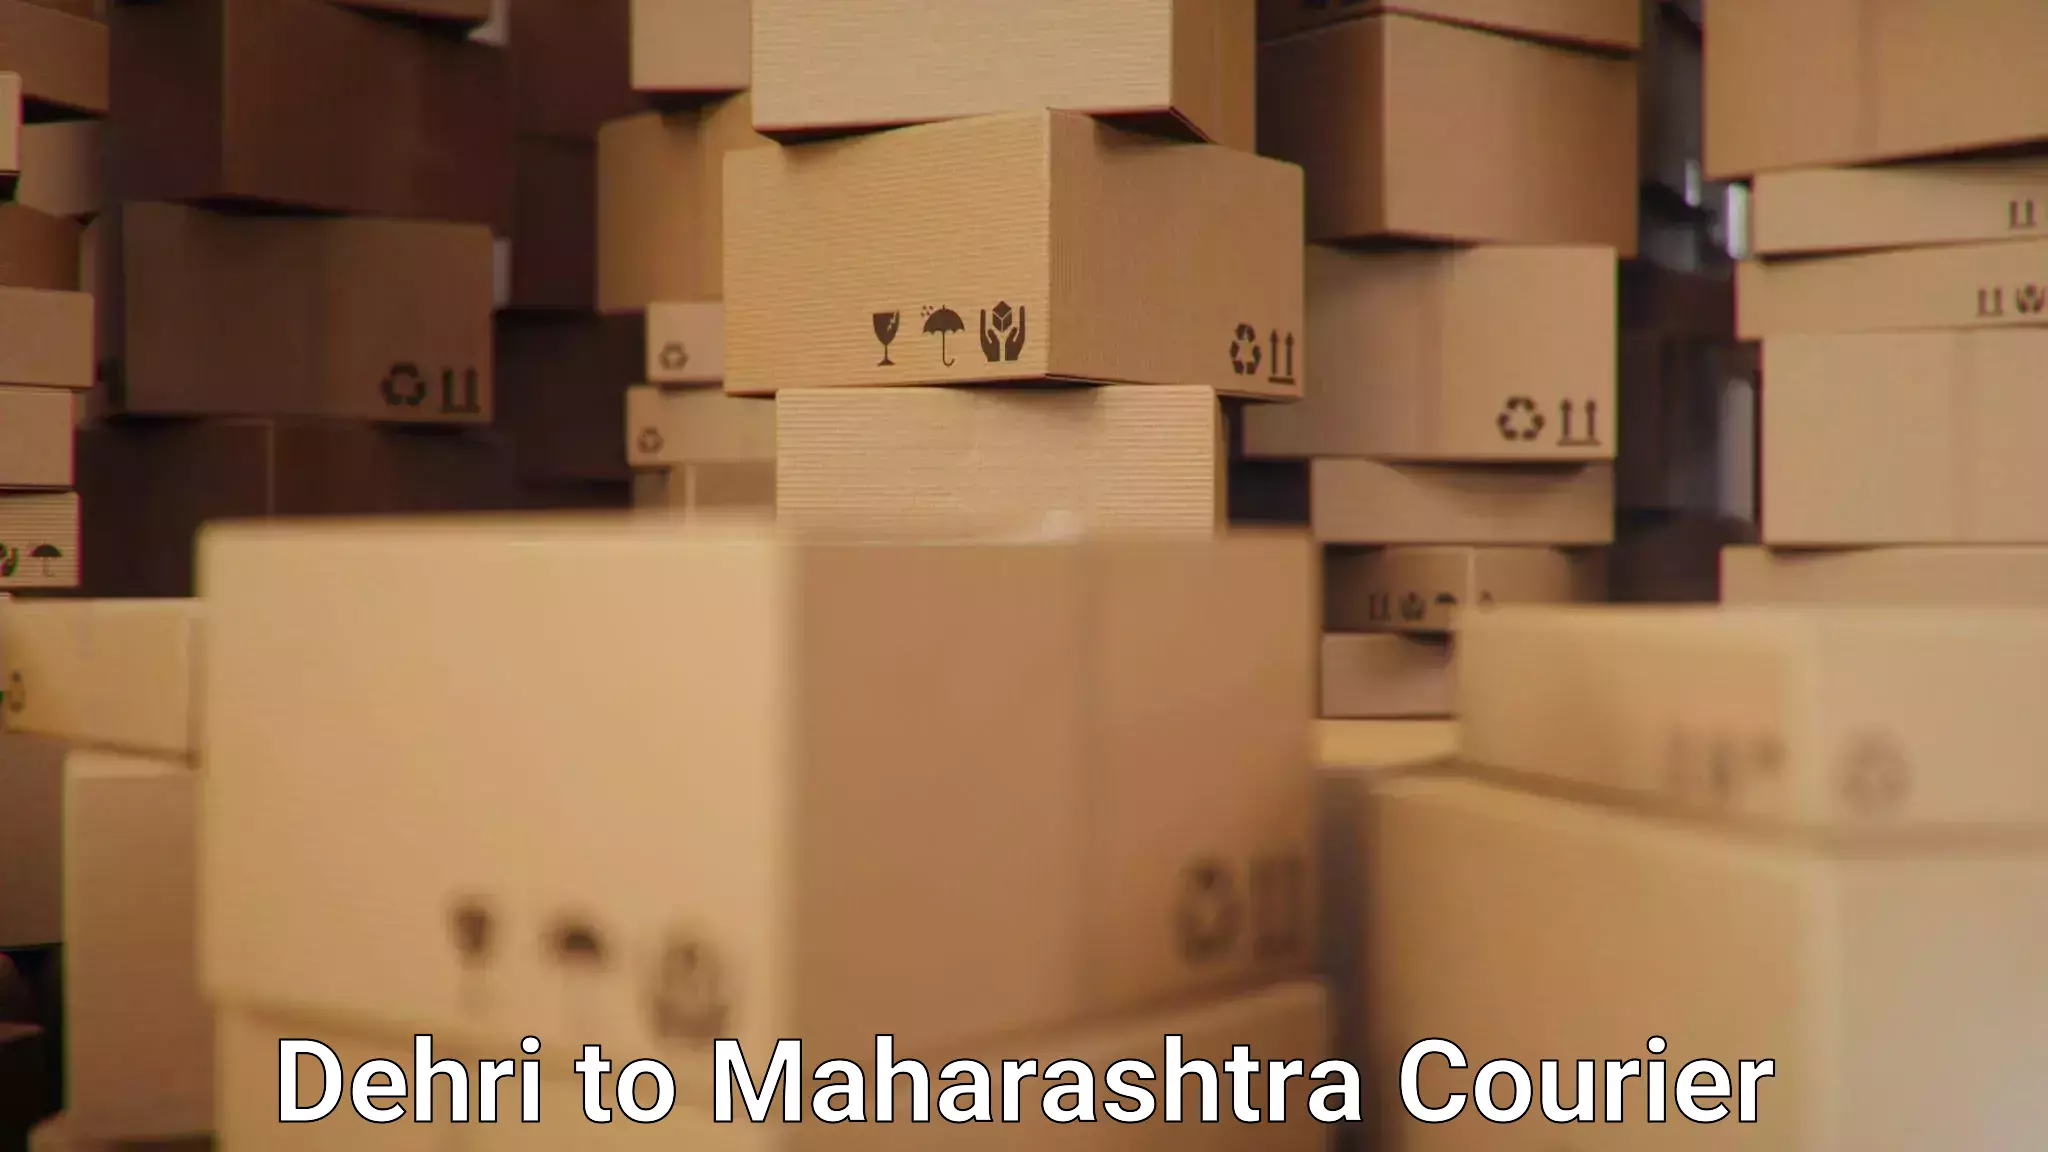 Logistics service provider Dehri to Maharashtra